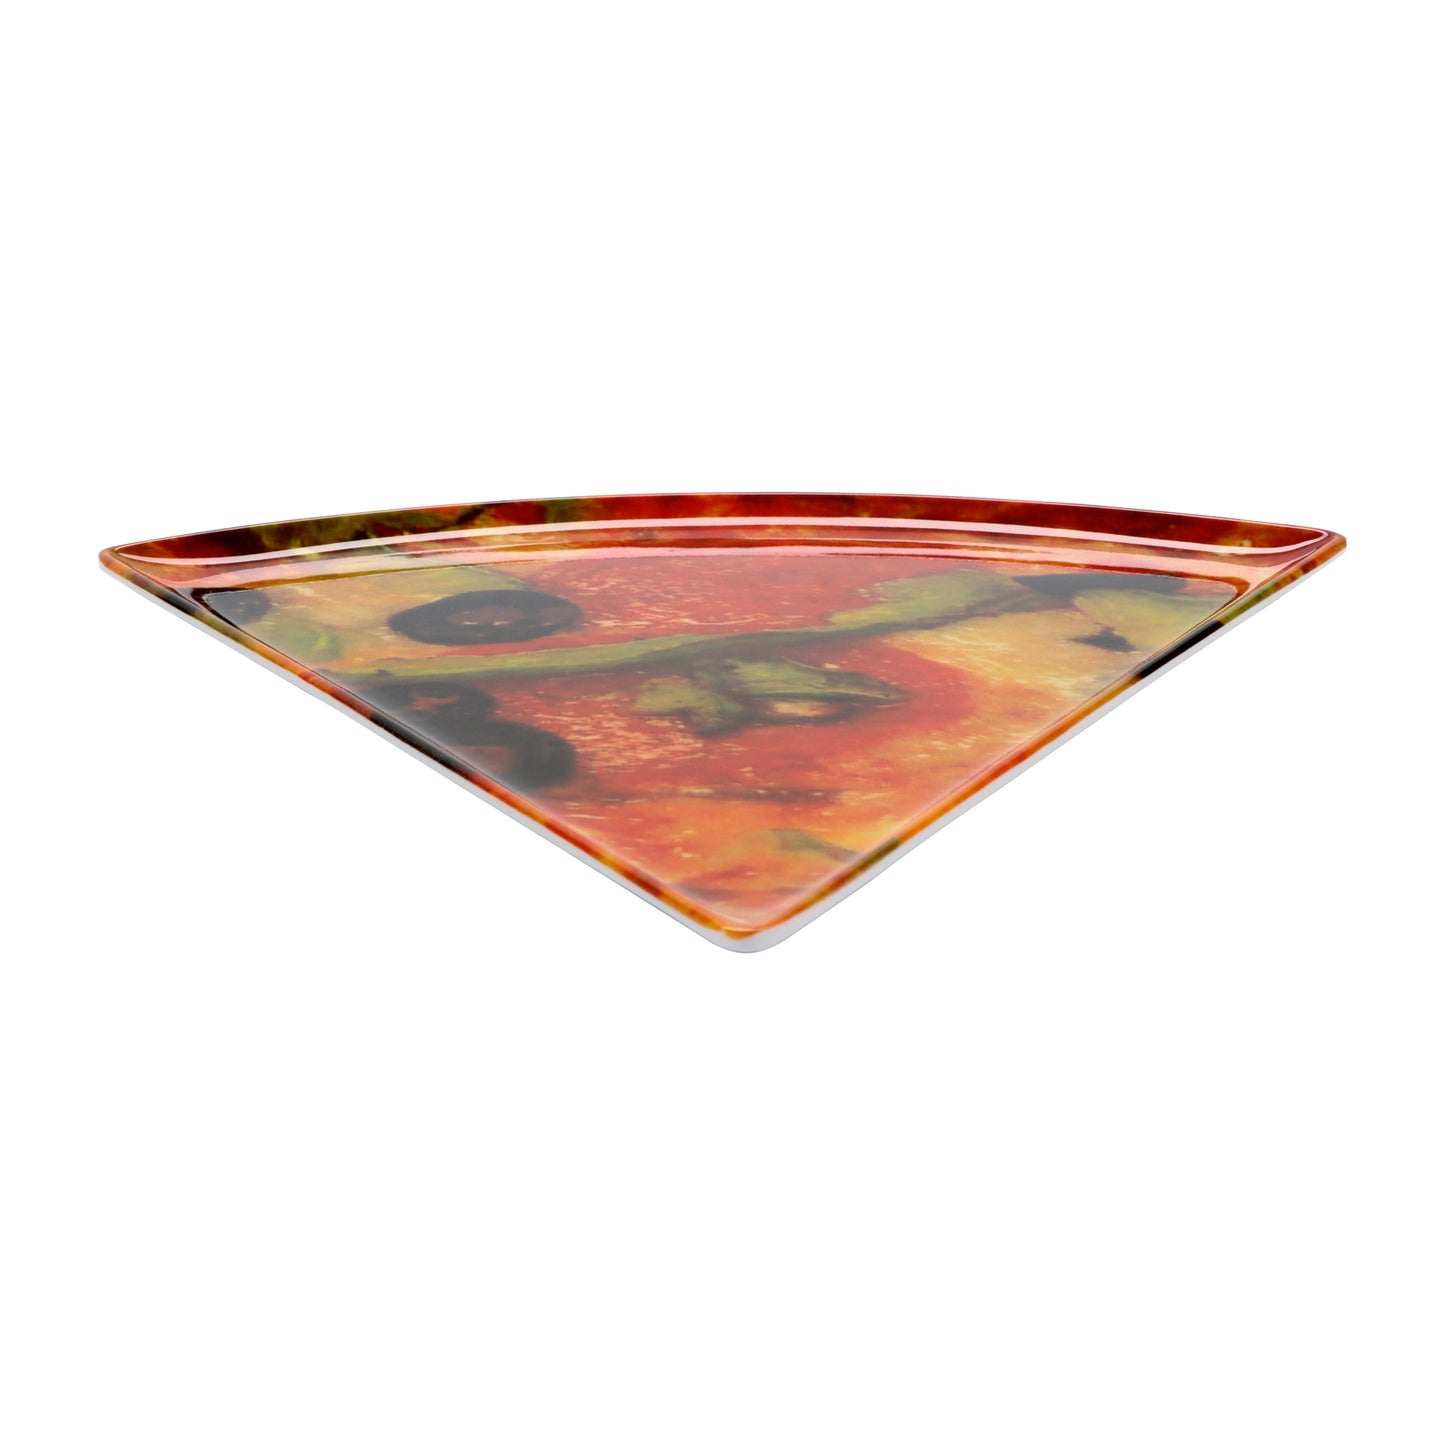 8.75" x 9" Triangle Pizza Plate